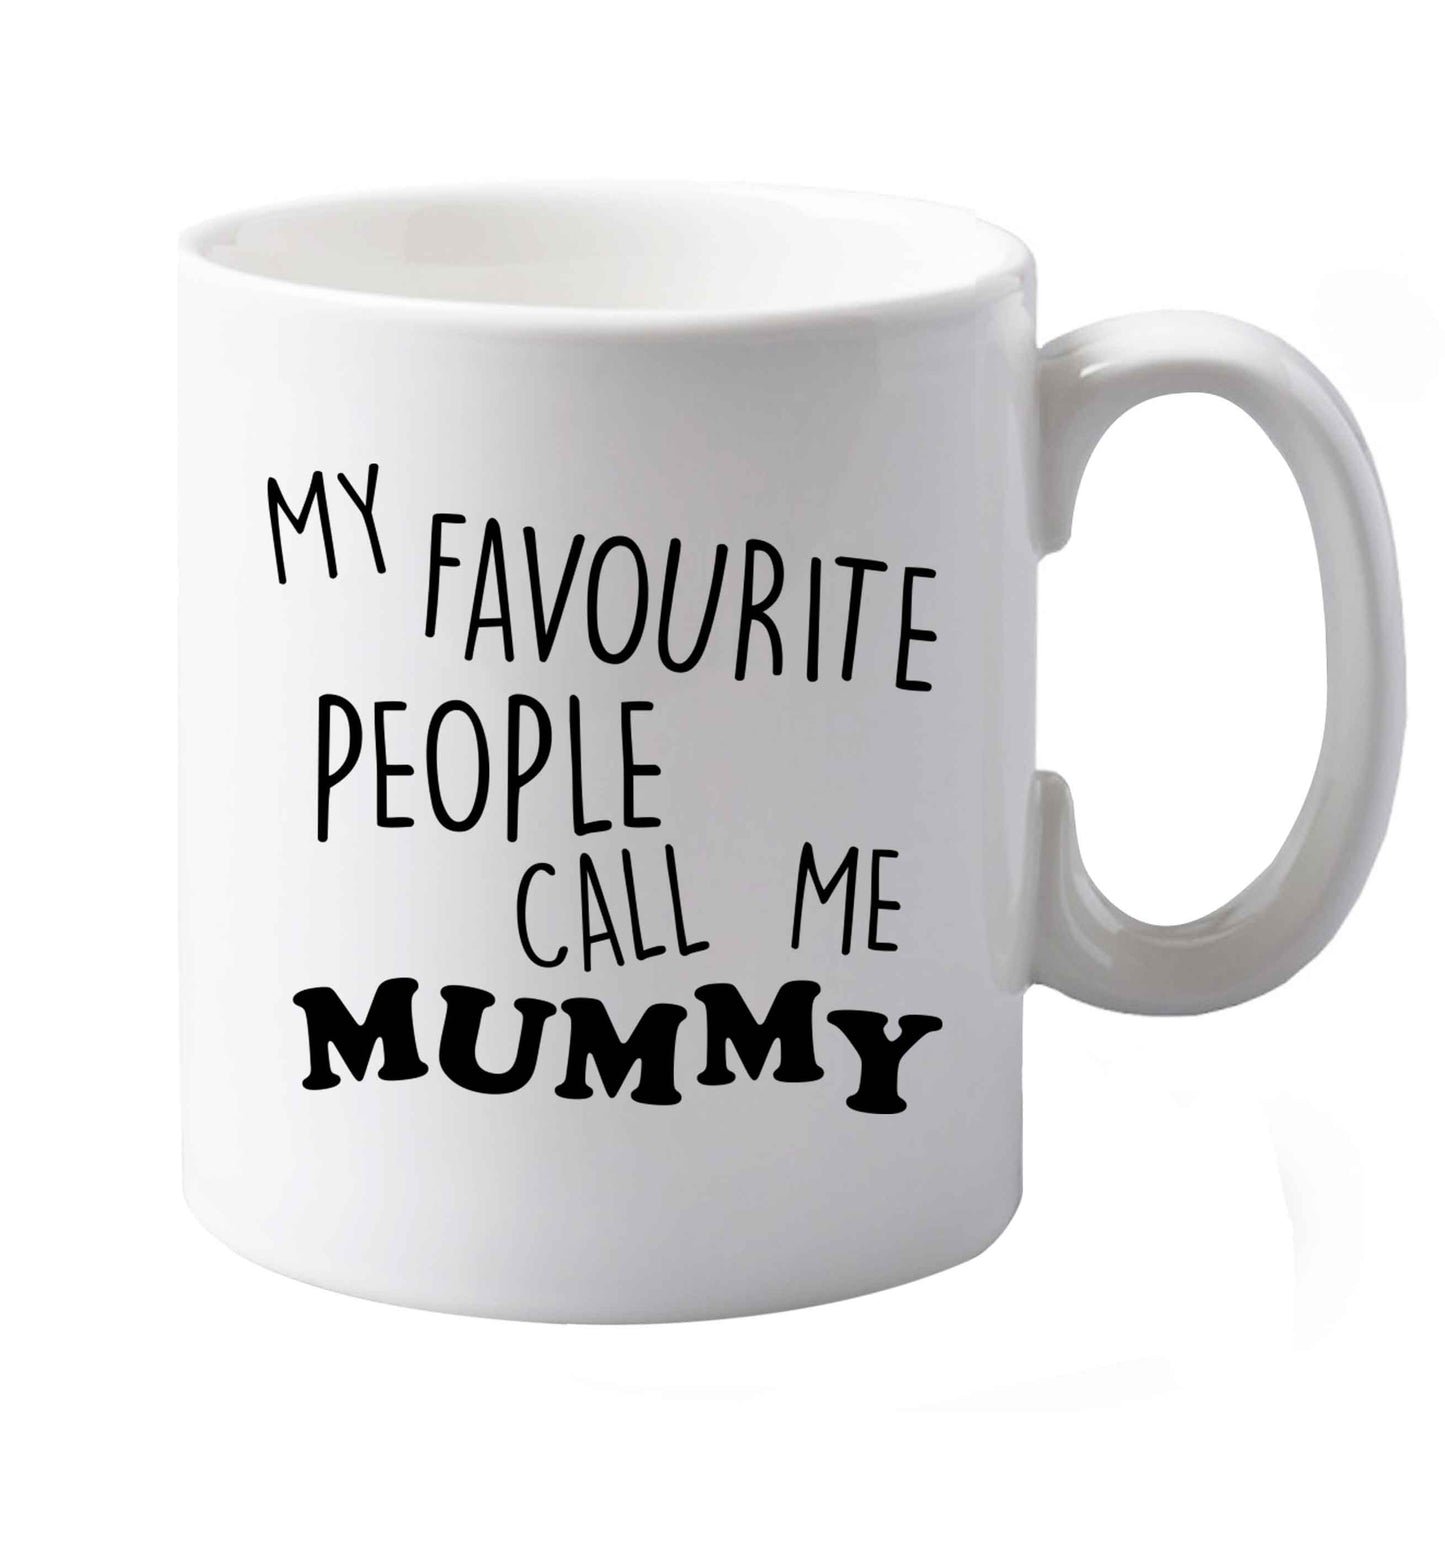 10 oz My favourite people call me mummy ceramic mug both sides